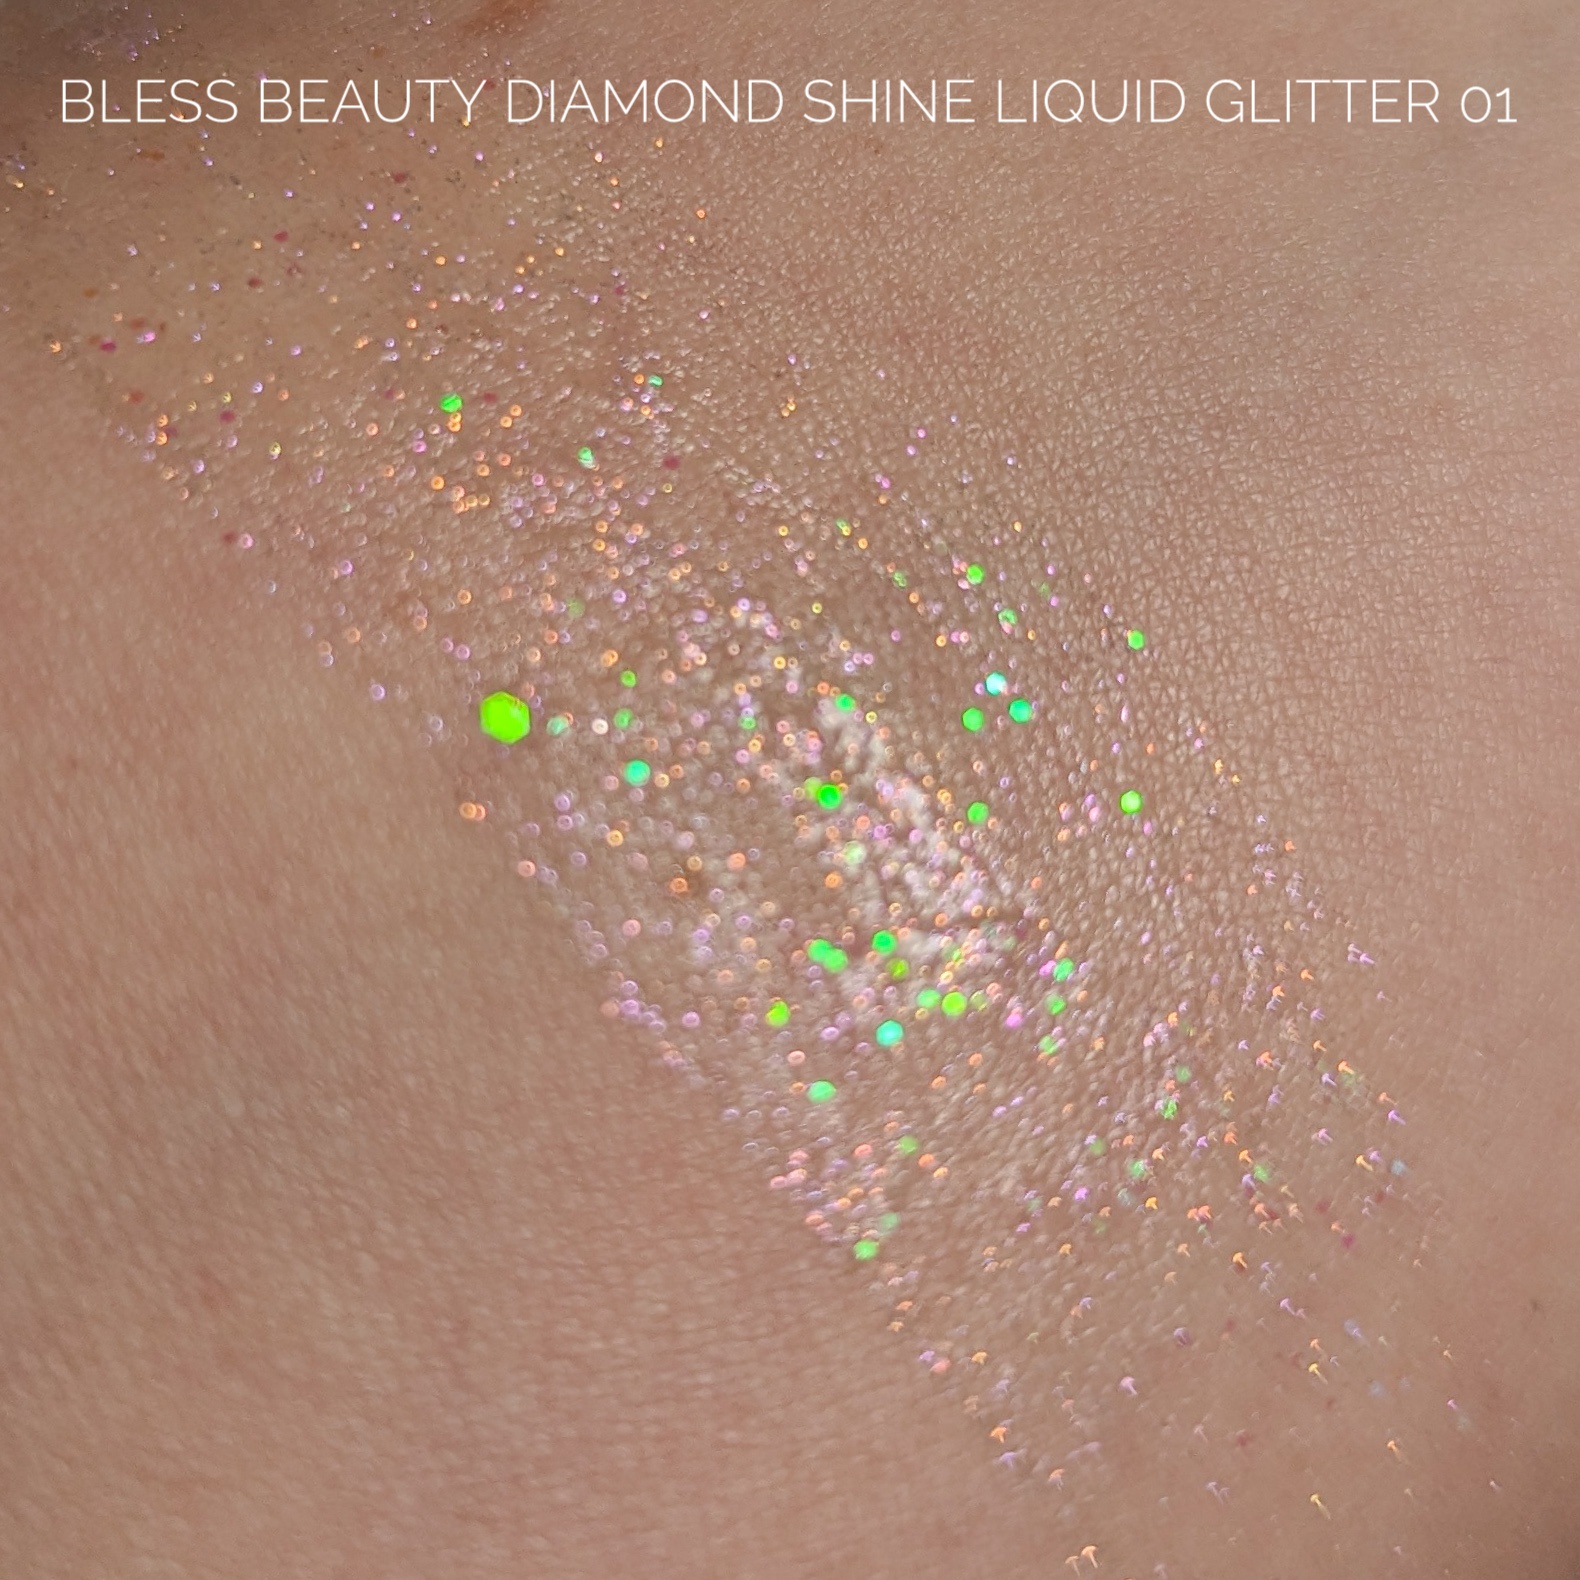 Bless Beauty Diamond Shine Liquid Glitter: Сяйво, що зачаровує